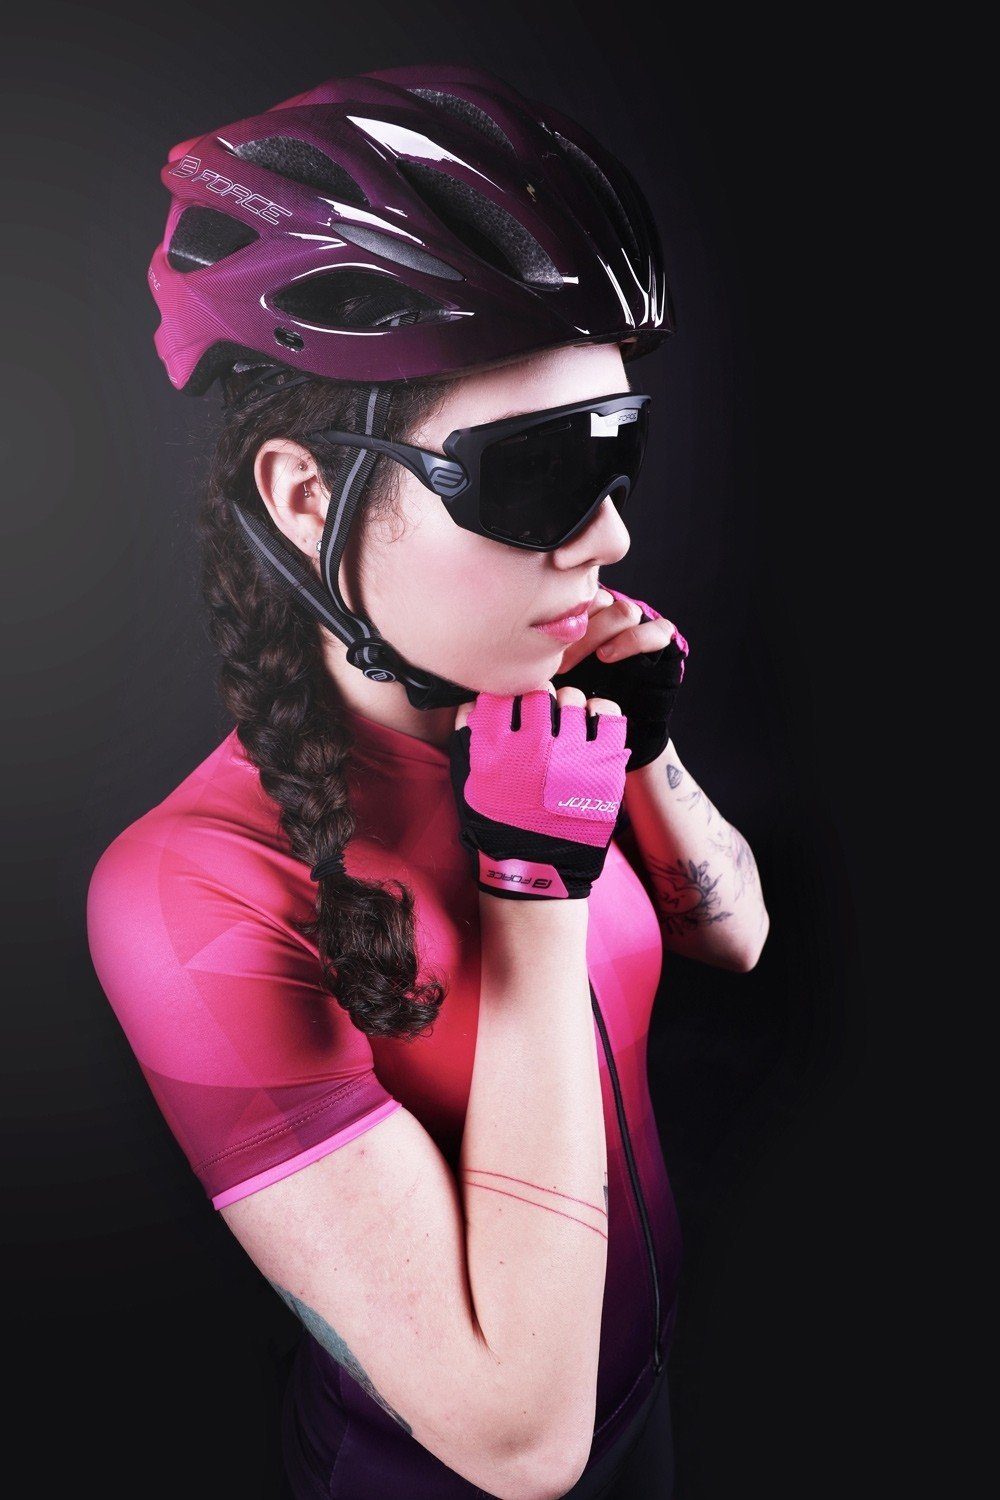 FORCE Fahrradhandschuhe Handschuhe pink-schwarz SECTOR FORCE LADY